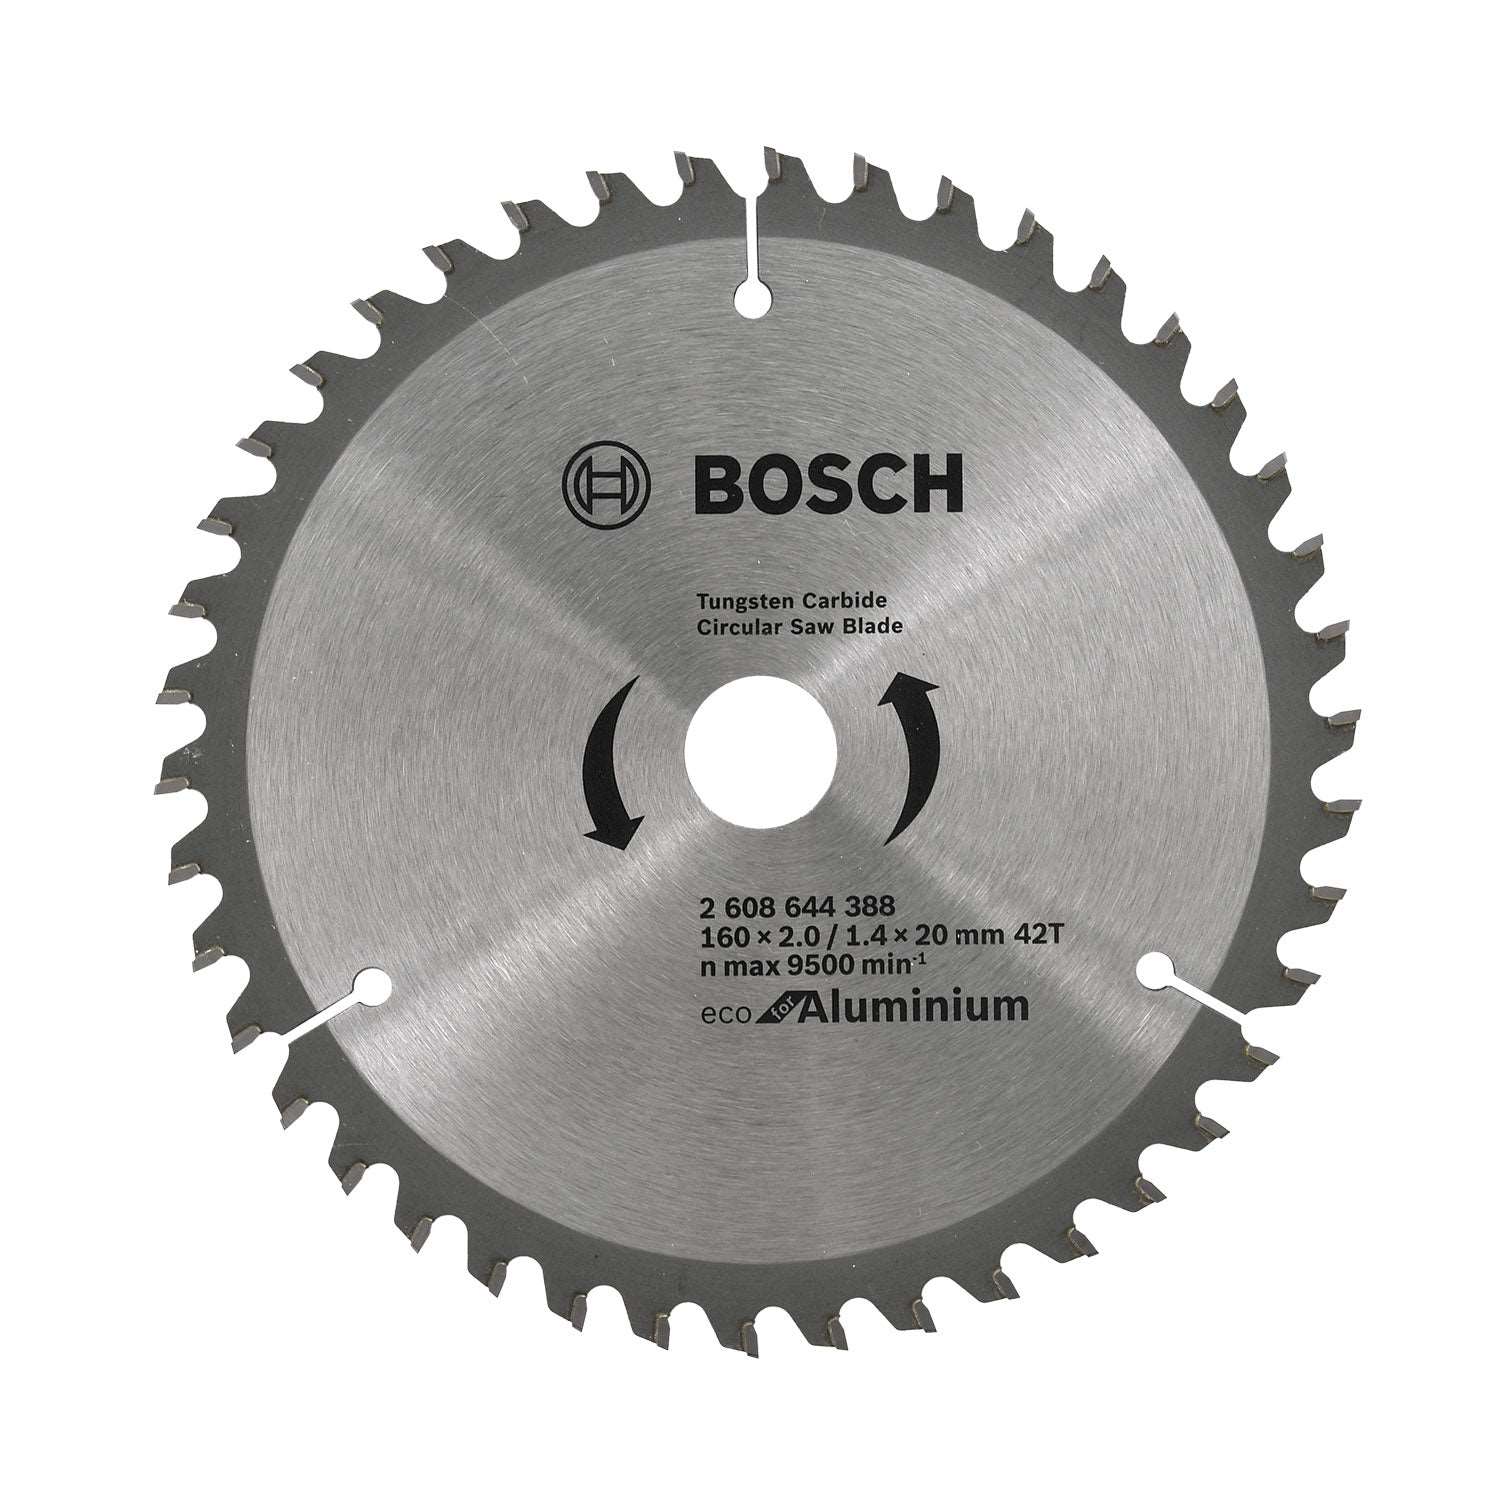 Bosch Circular Saw Blade Eco for Aluminium 160mm 42t 2608644388 Power Tool Services